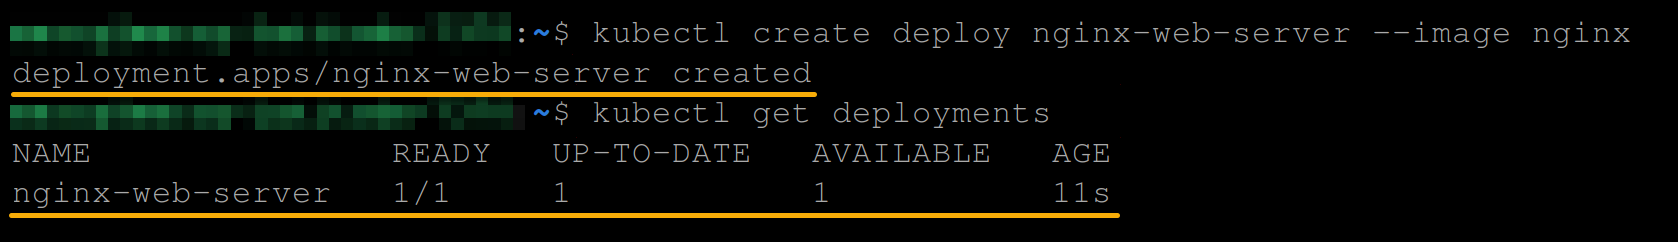 Creating and viewing NGINX (nginx-web-server) deployment